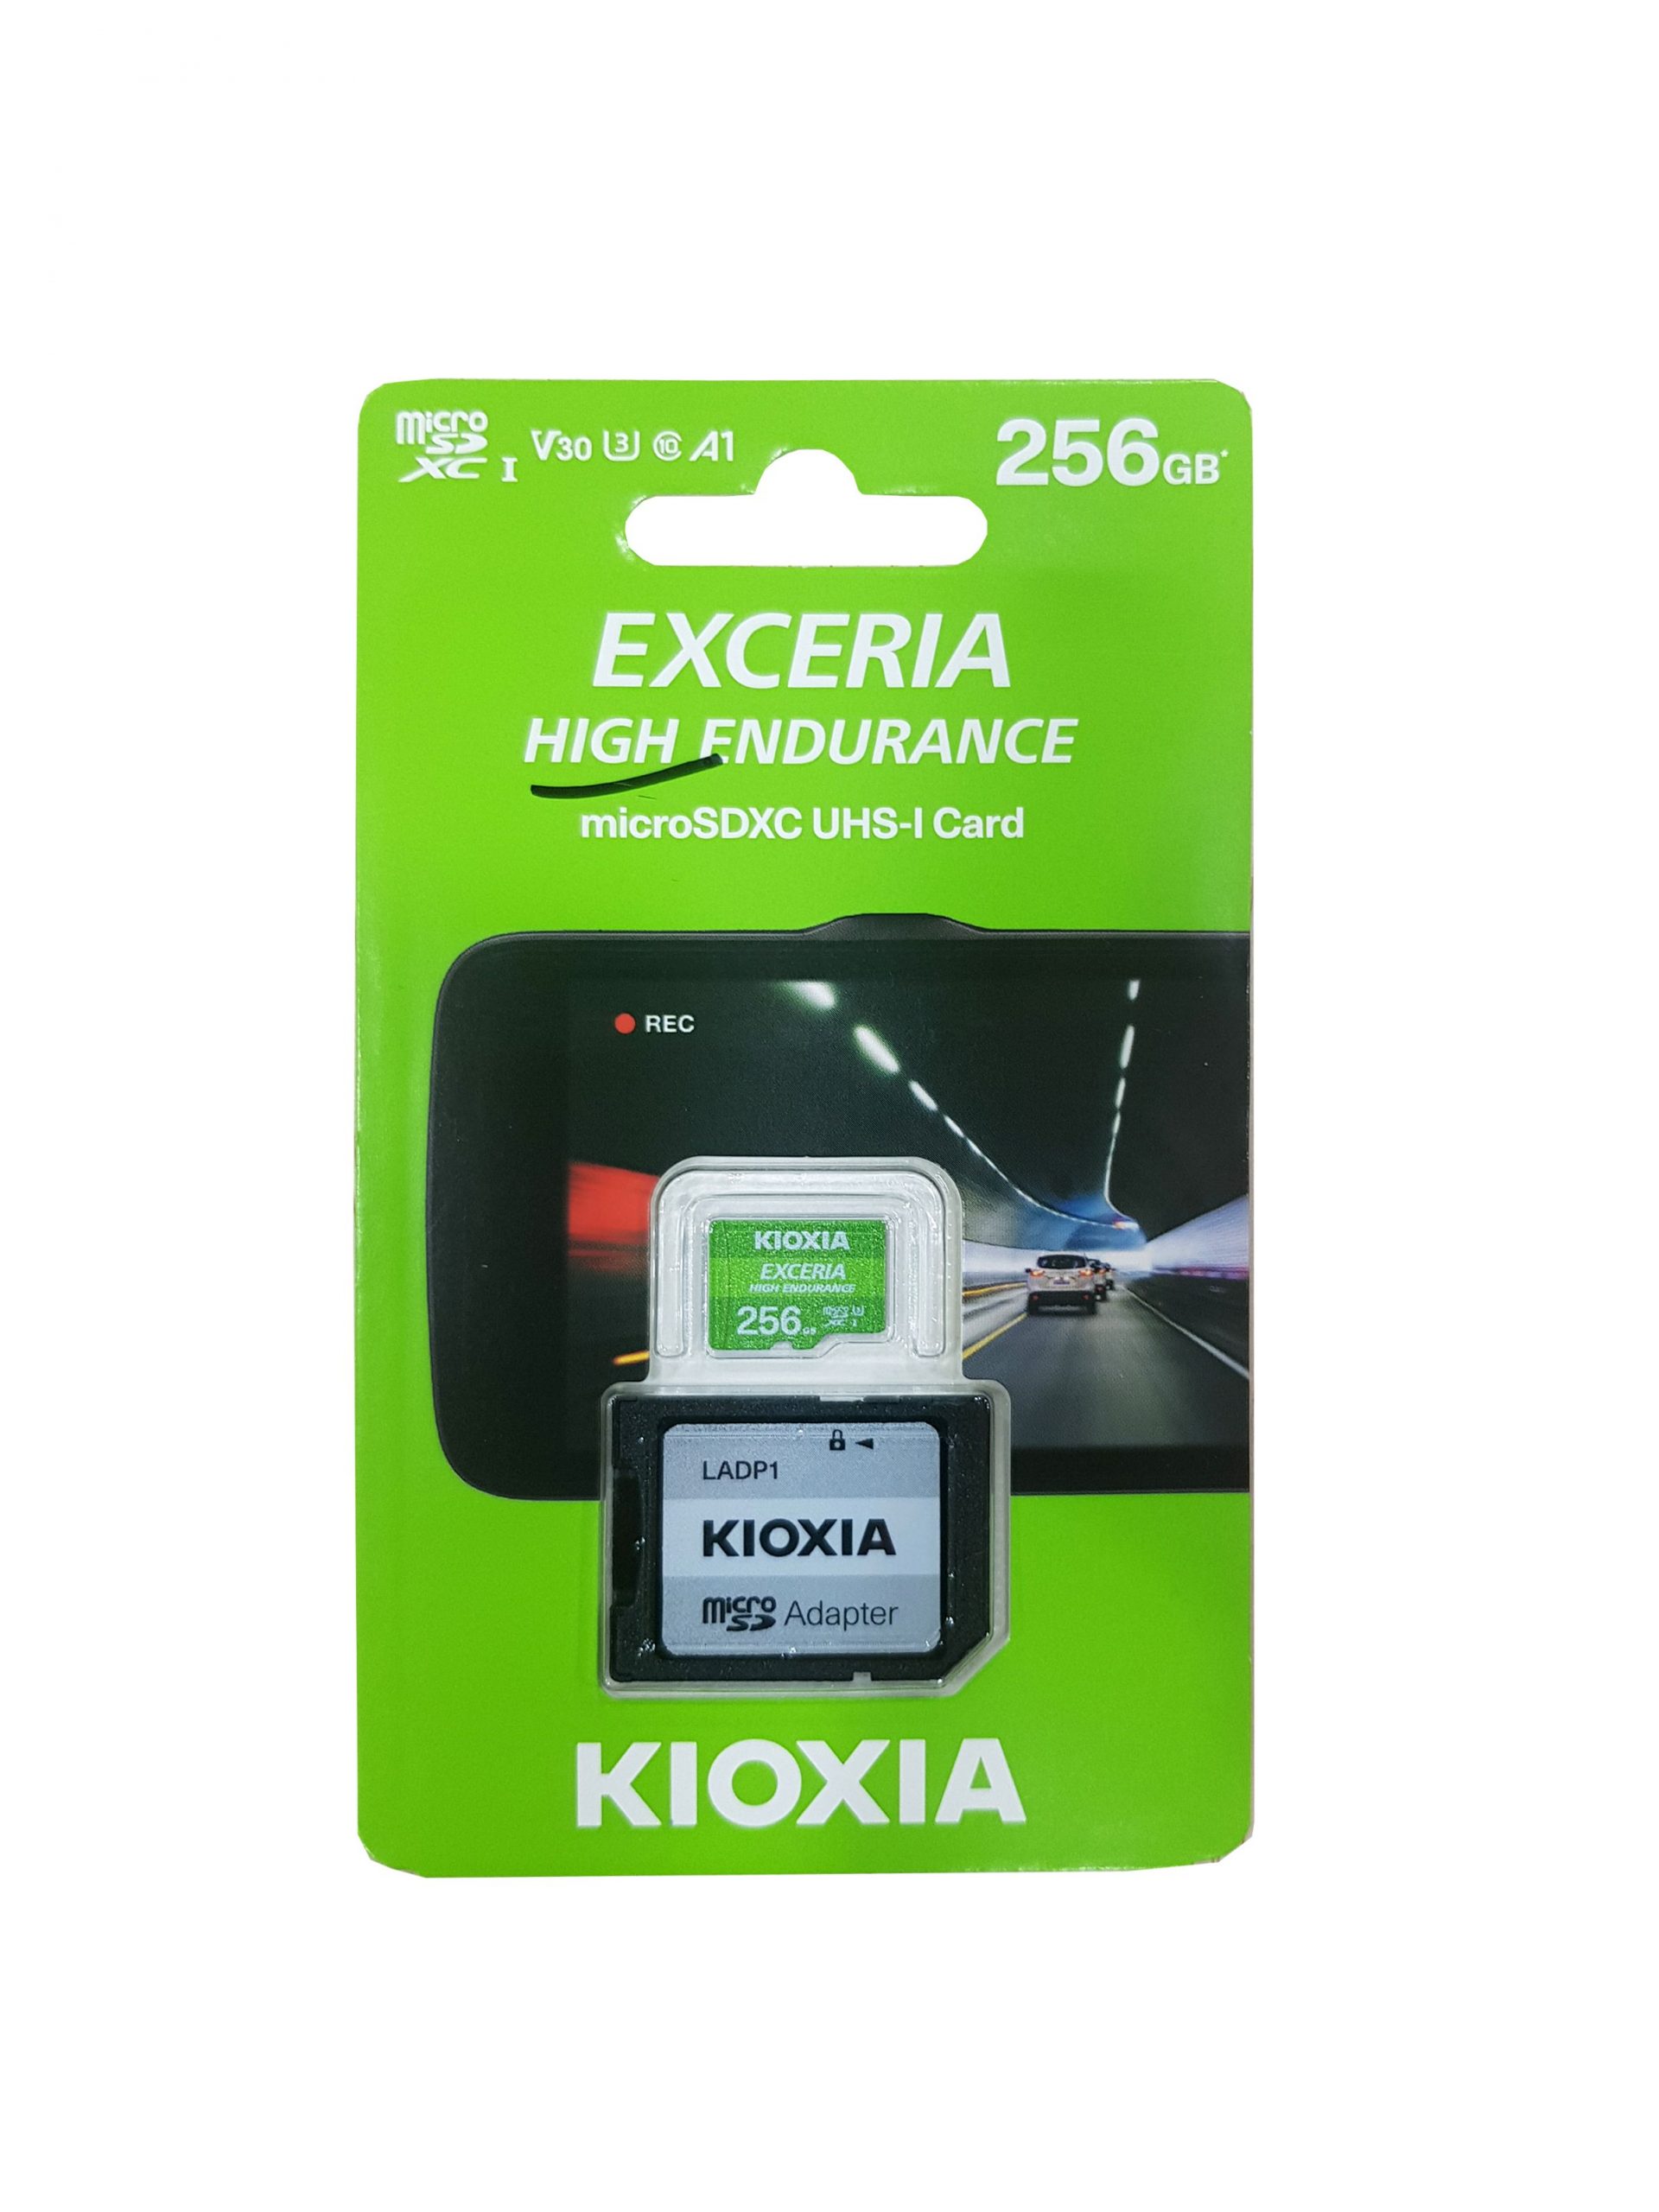 KIOXIA Exceria High Endurance MicroSDHC UHS-1 Card 256GB